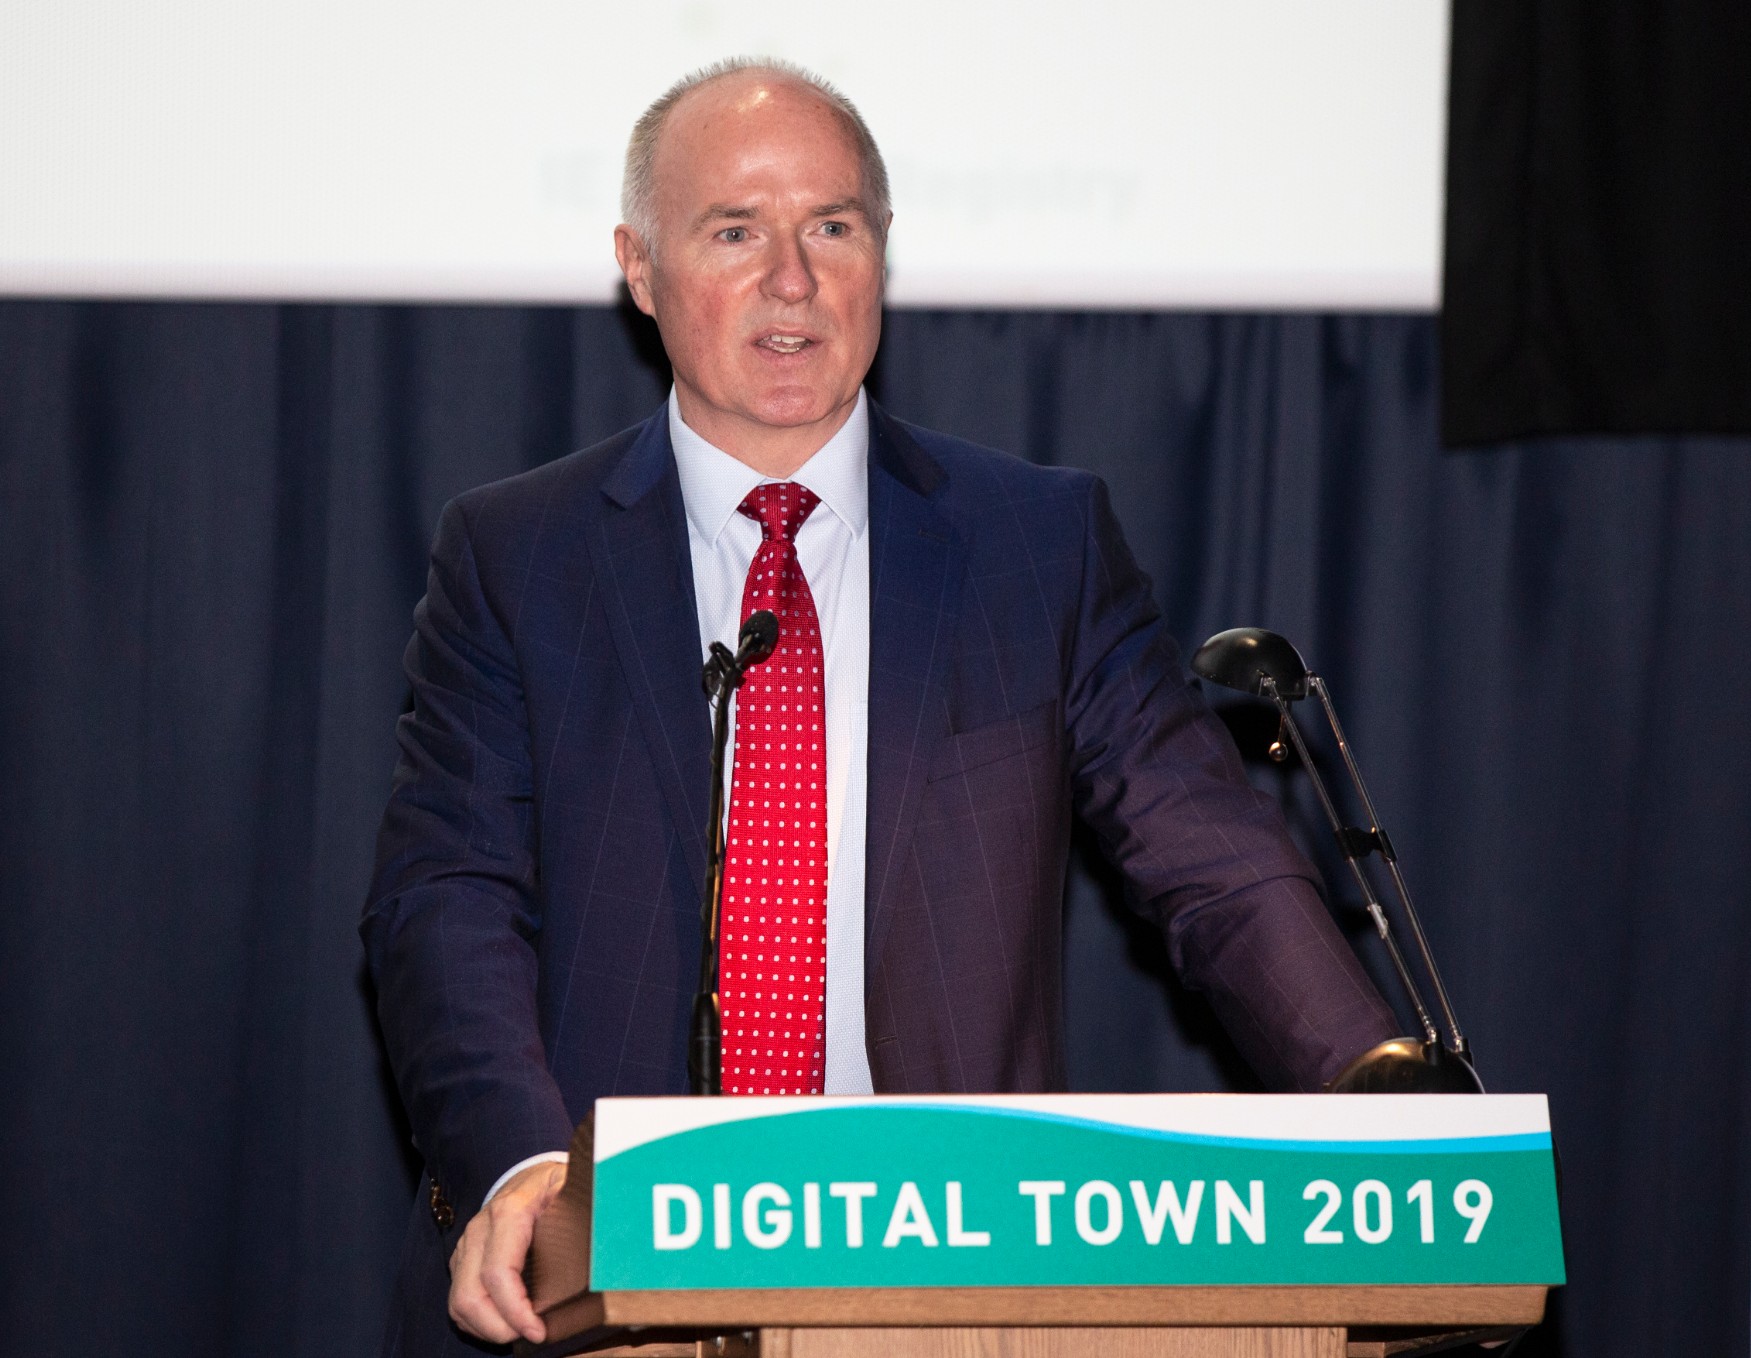 David Curtin delivering opening address at Closing Ceremony of Digital Town Sligo